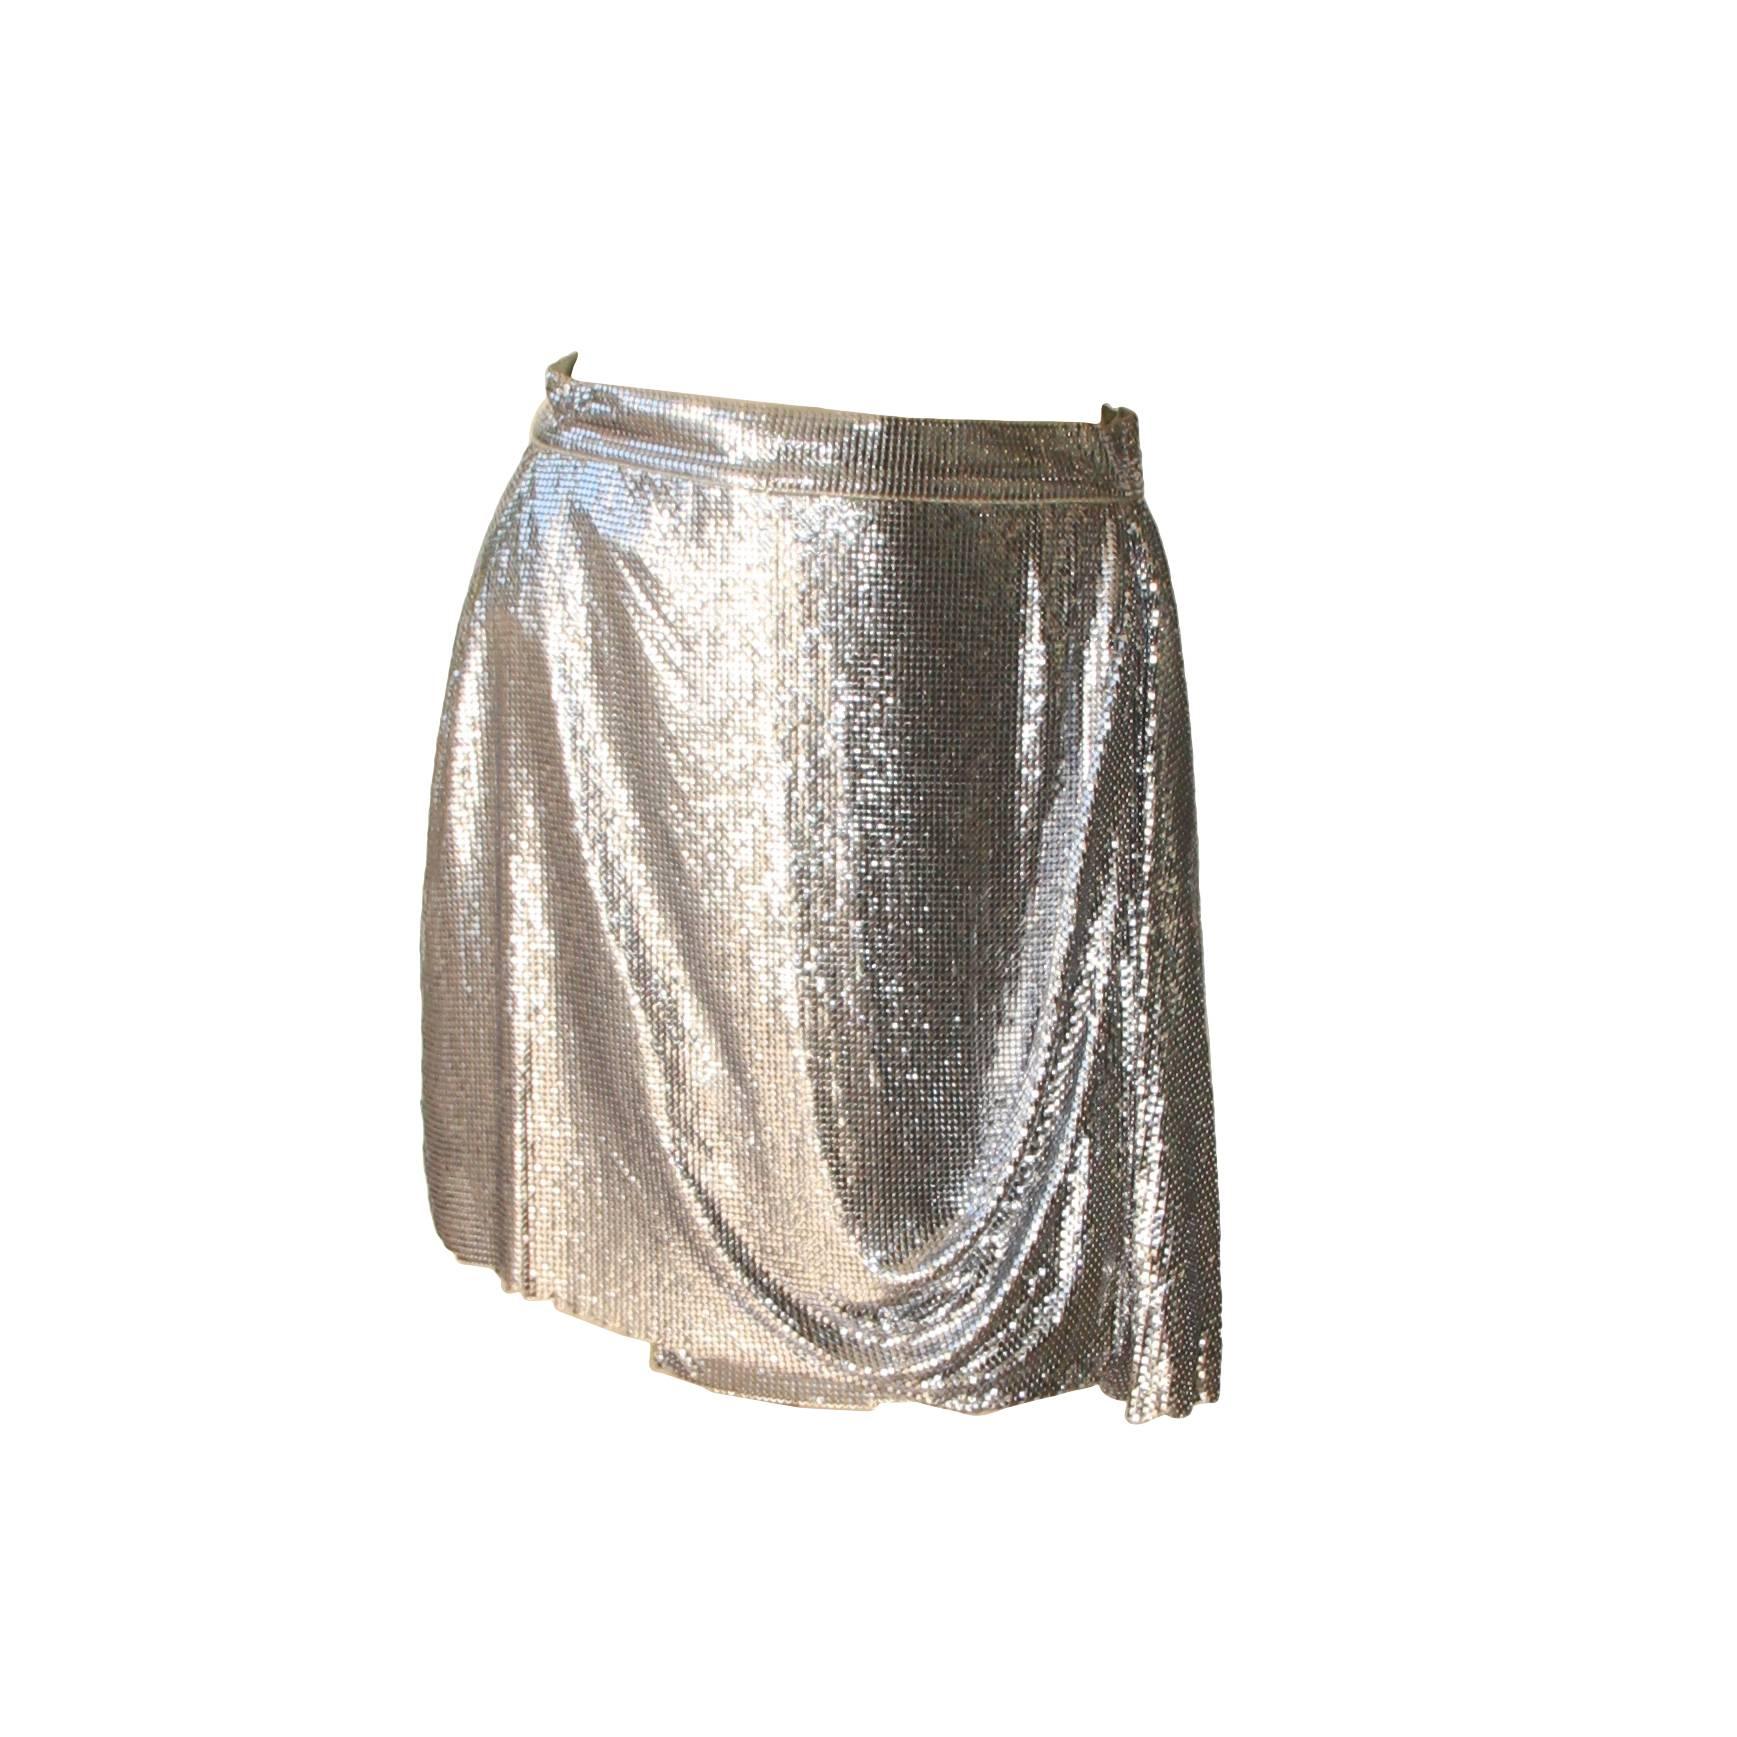 Iconic Gianni Versace Mesh Metal Skirt Spring 1995 For Sale